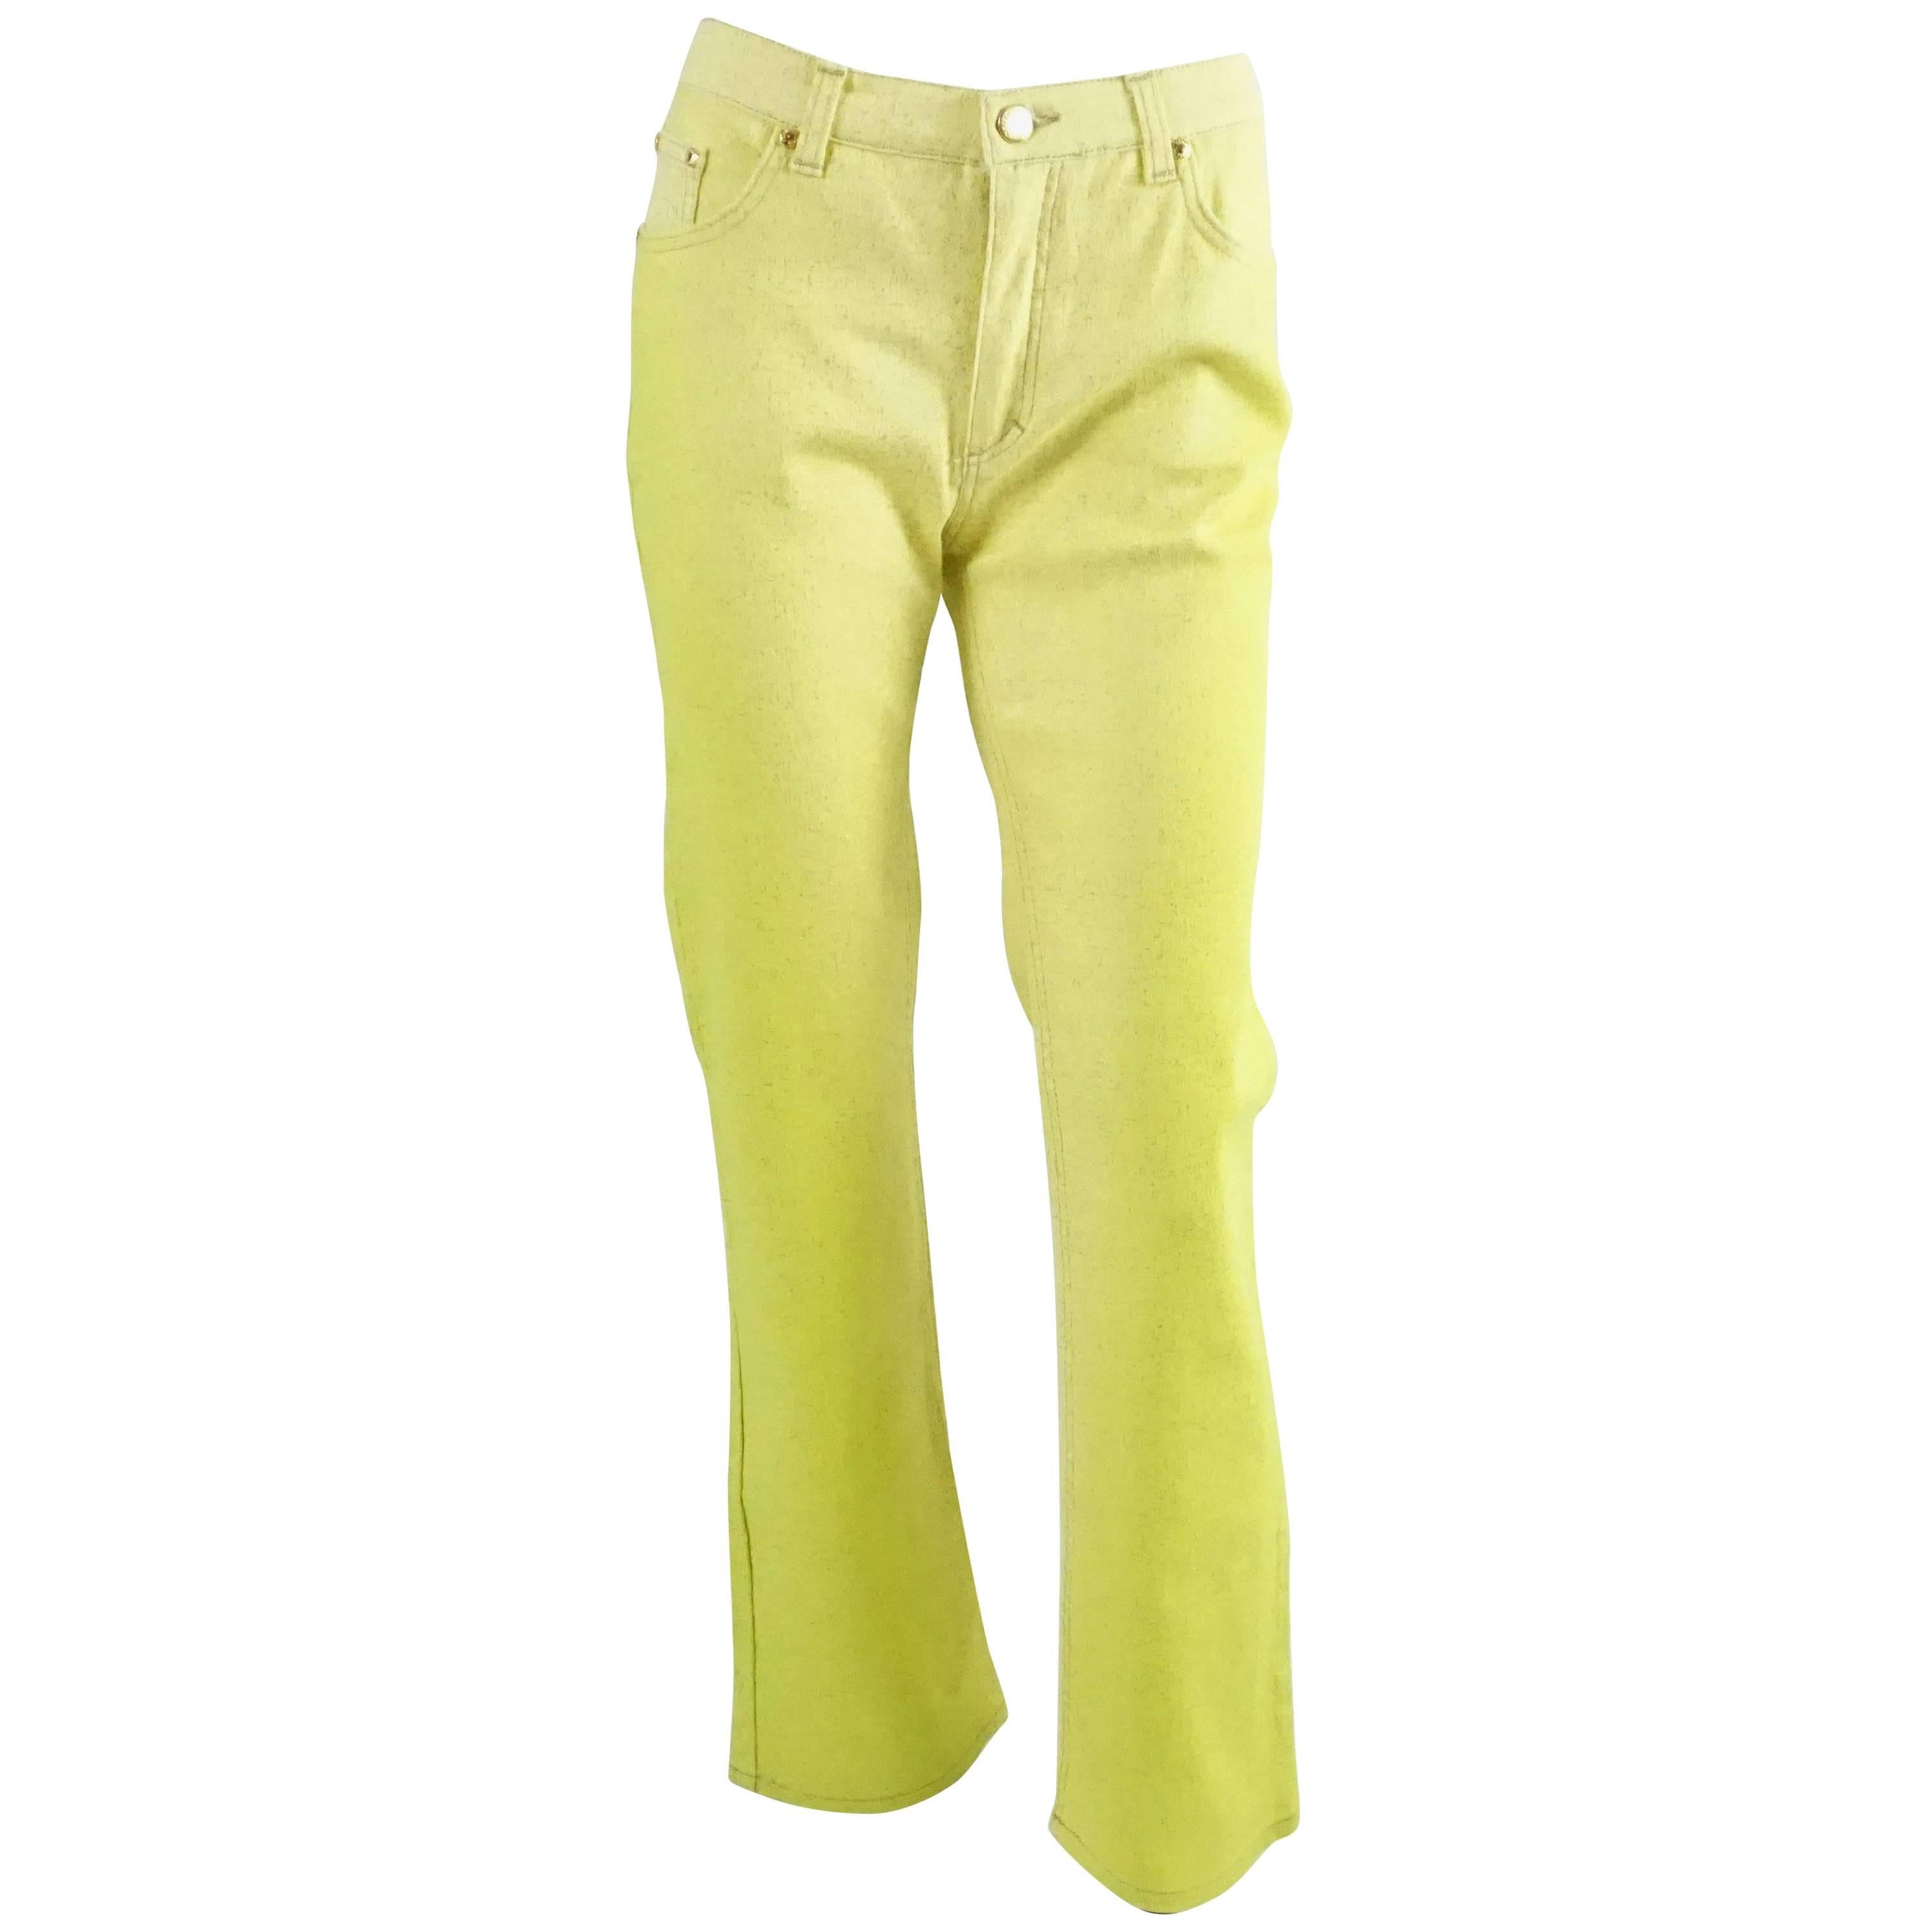 Roberto Cavalli 1990's High Waisted Yellow Glitter Boot cut Jeans - Size Medium